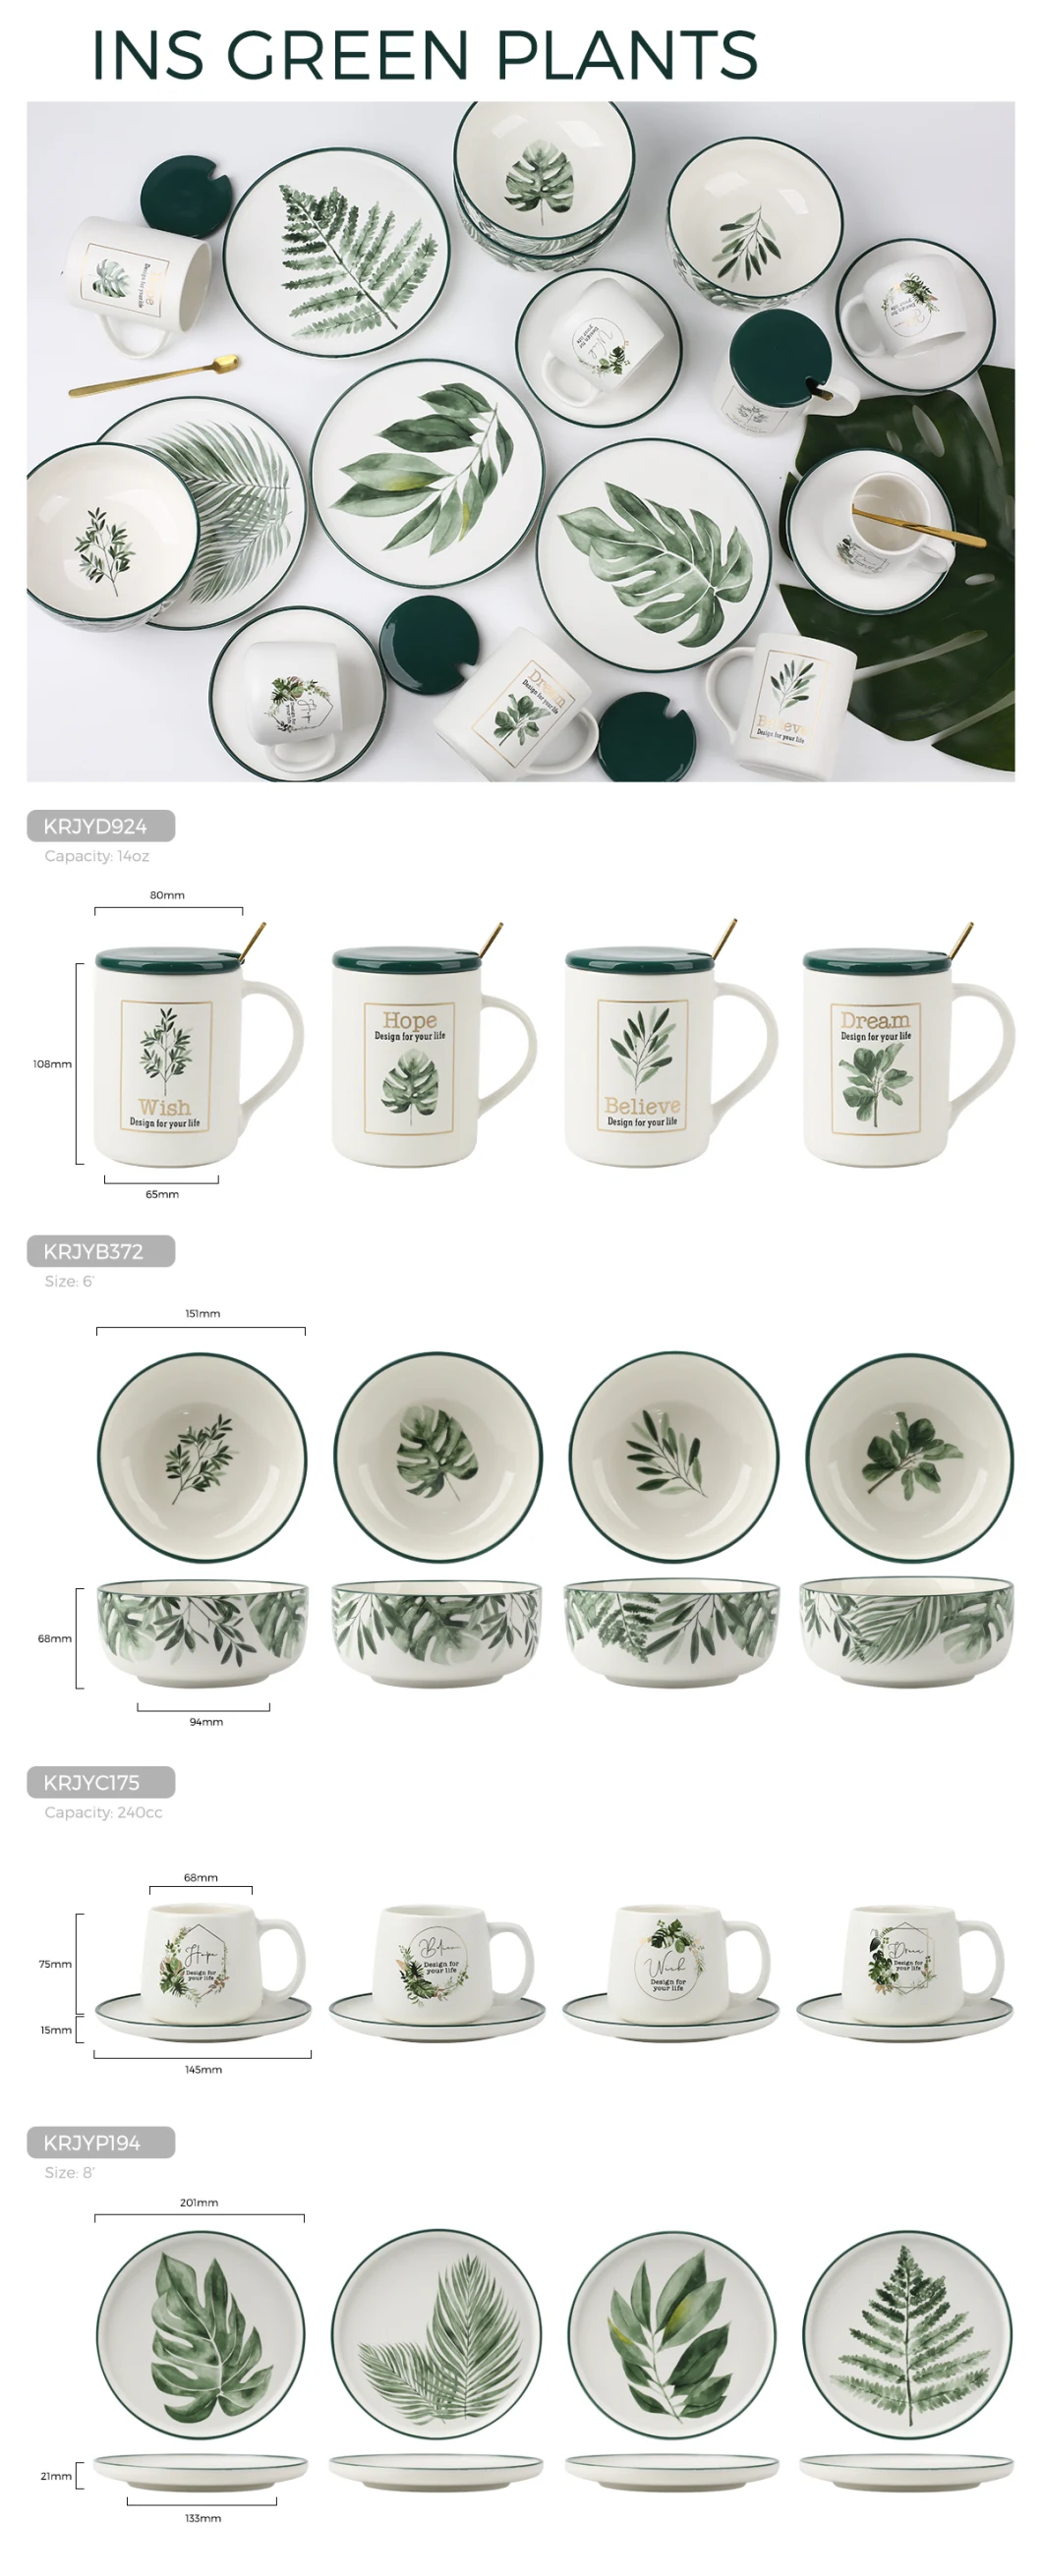 Kalring Ceramic Bowl Green Plants Design Color Rim Size 6" Matt White Glaze Outside Bottom Inside Glossy White with Design for Daily Use